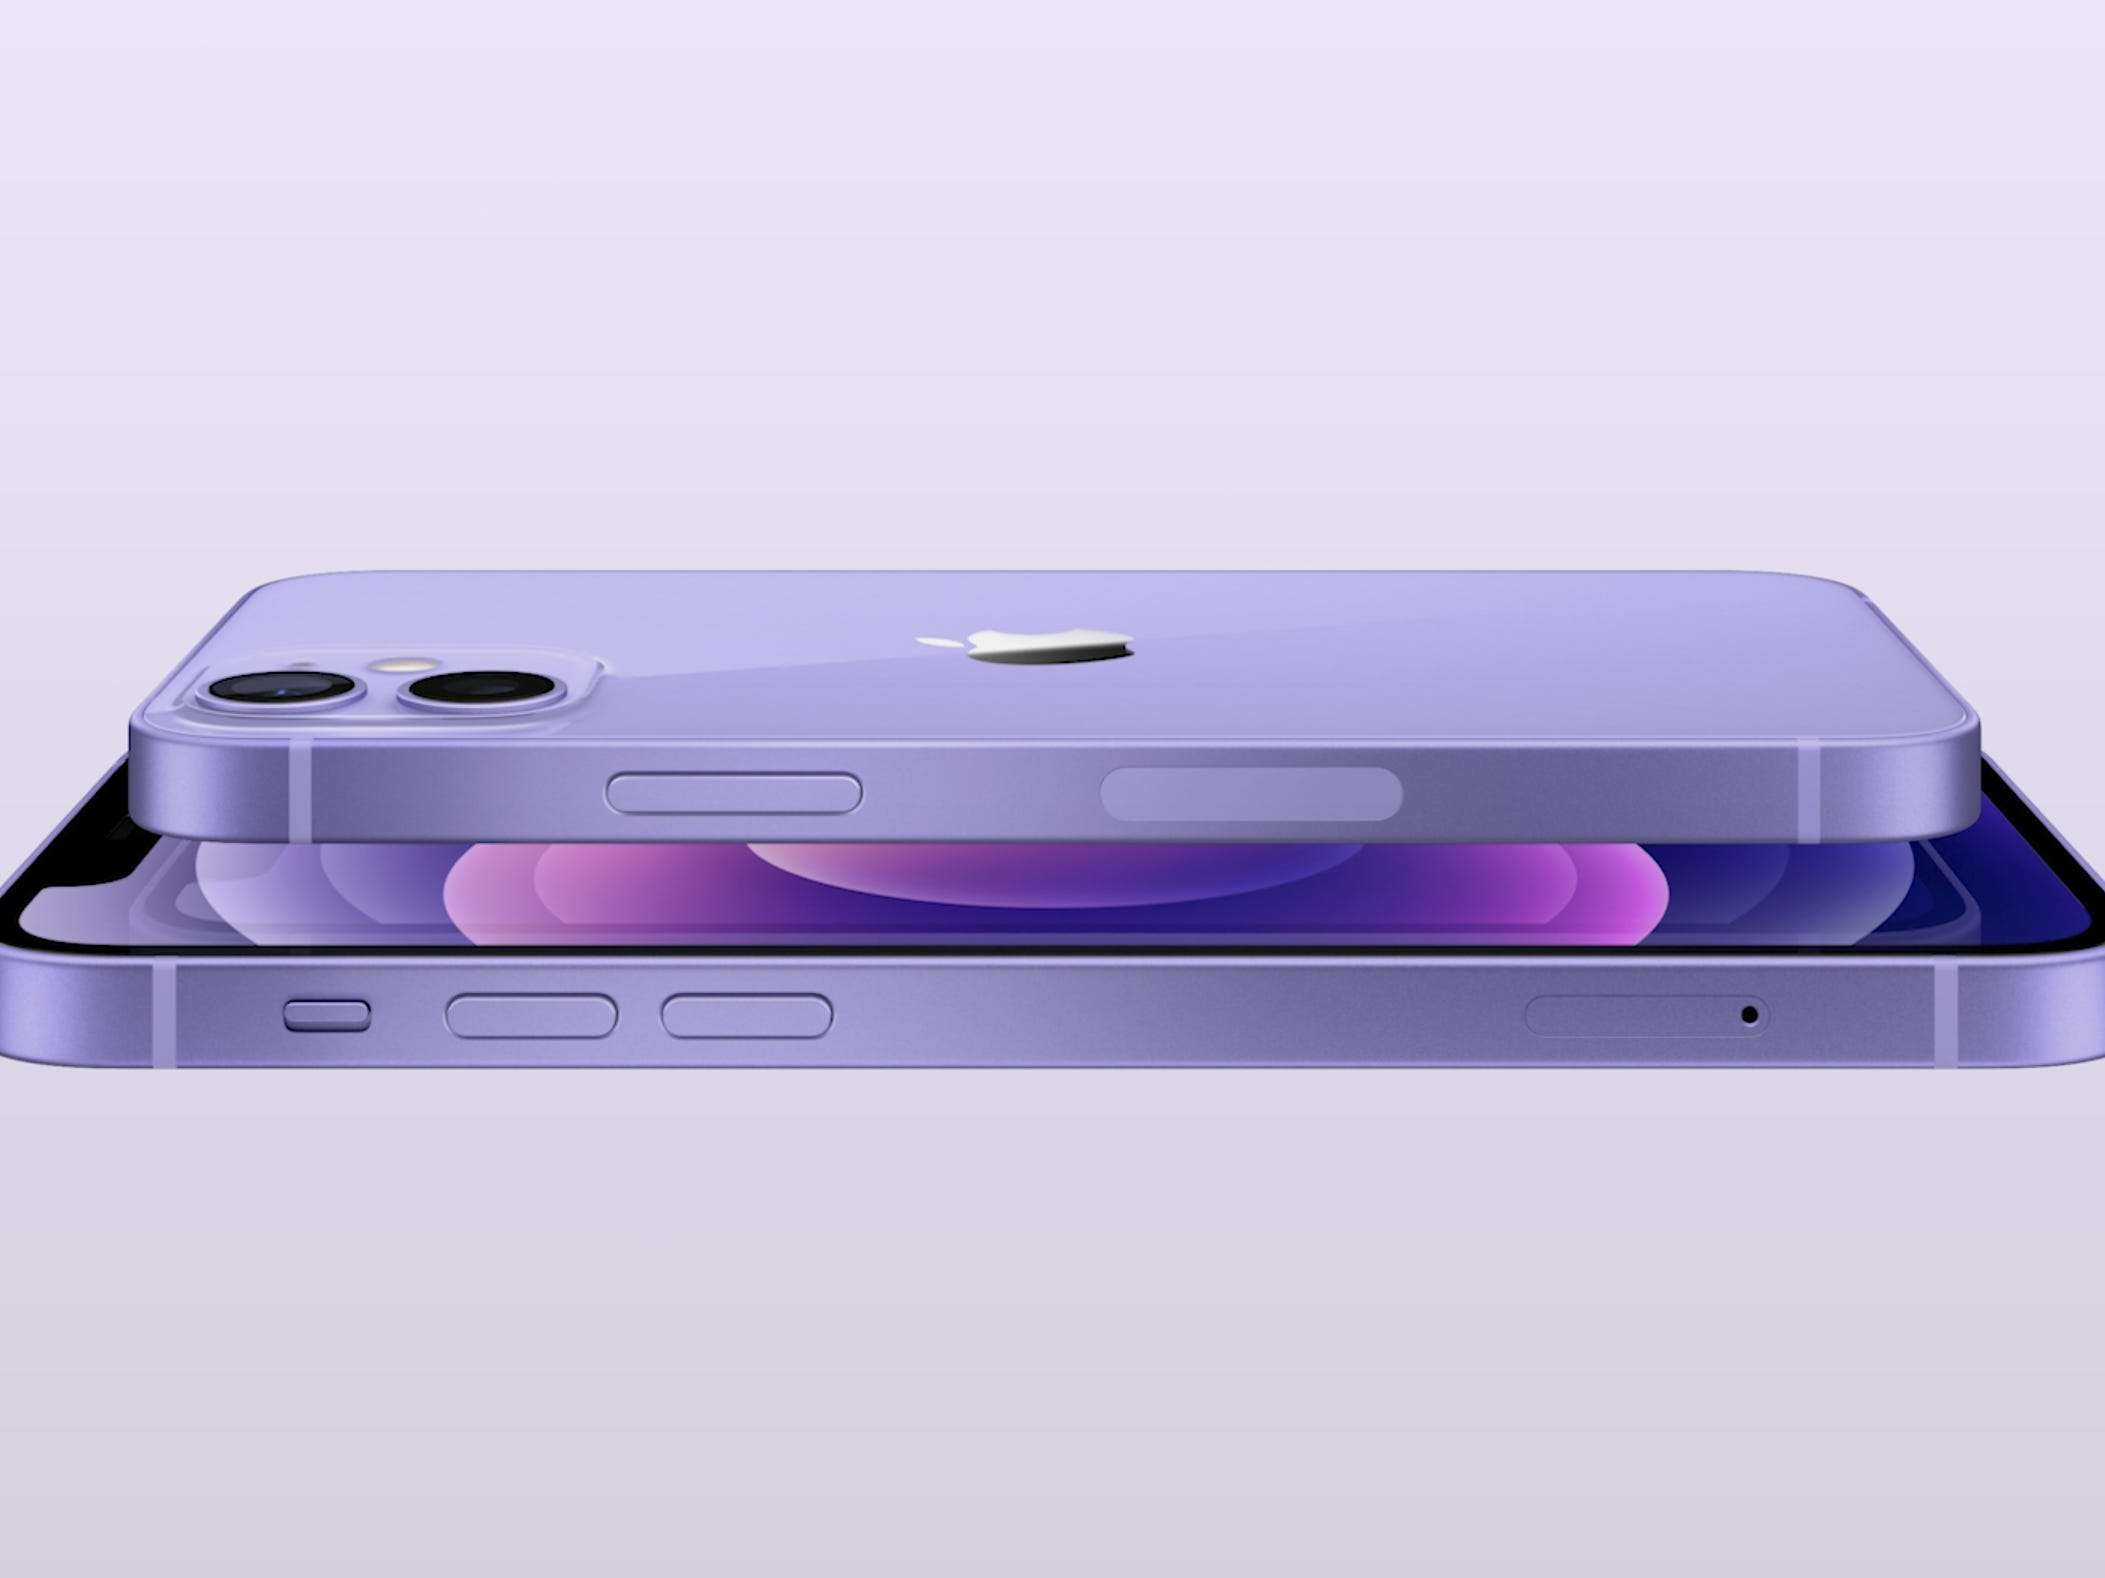 new purple iphone